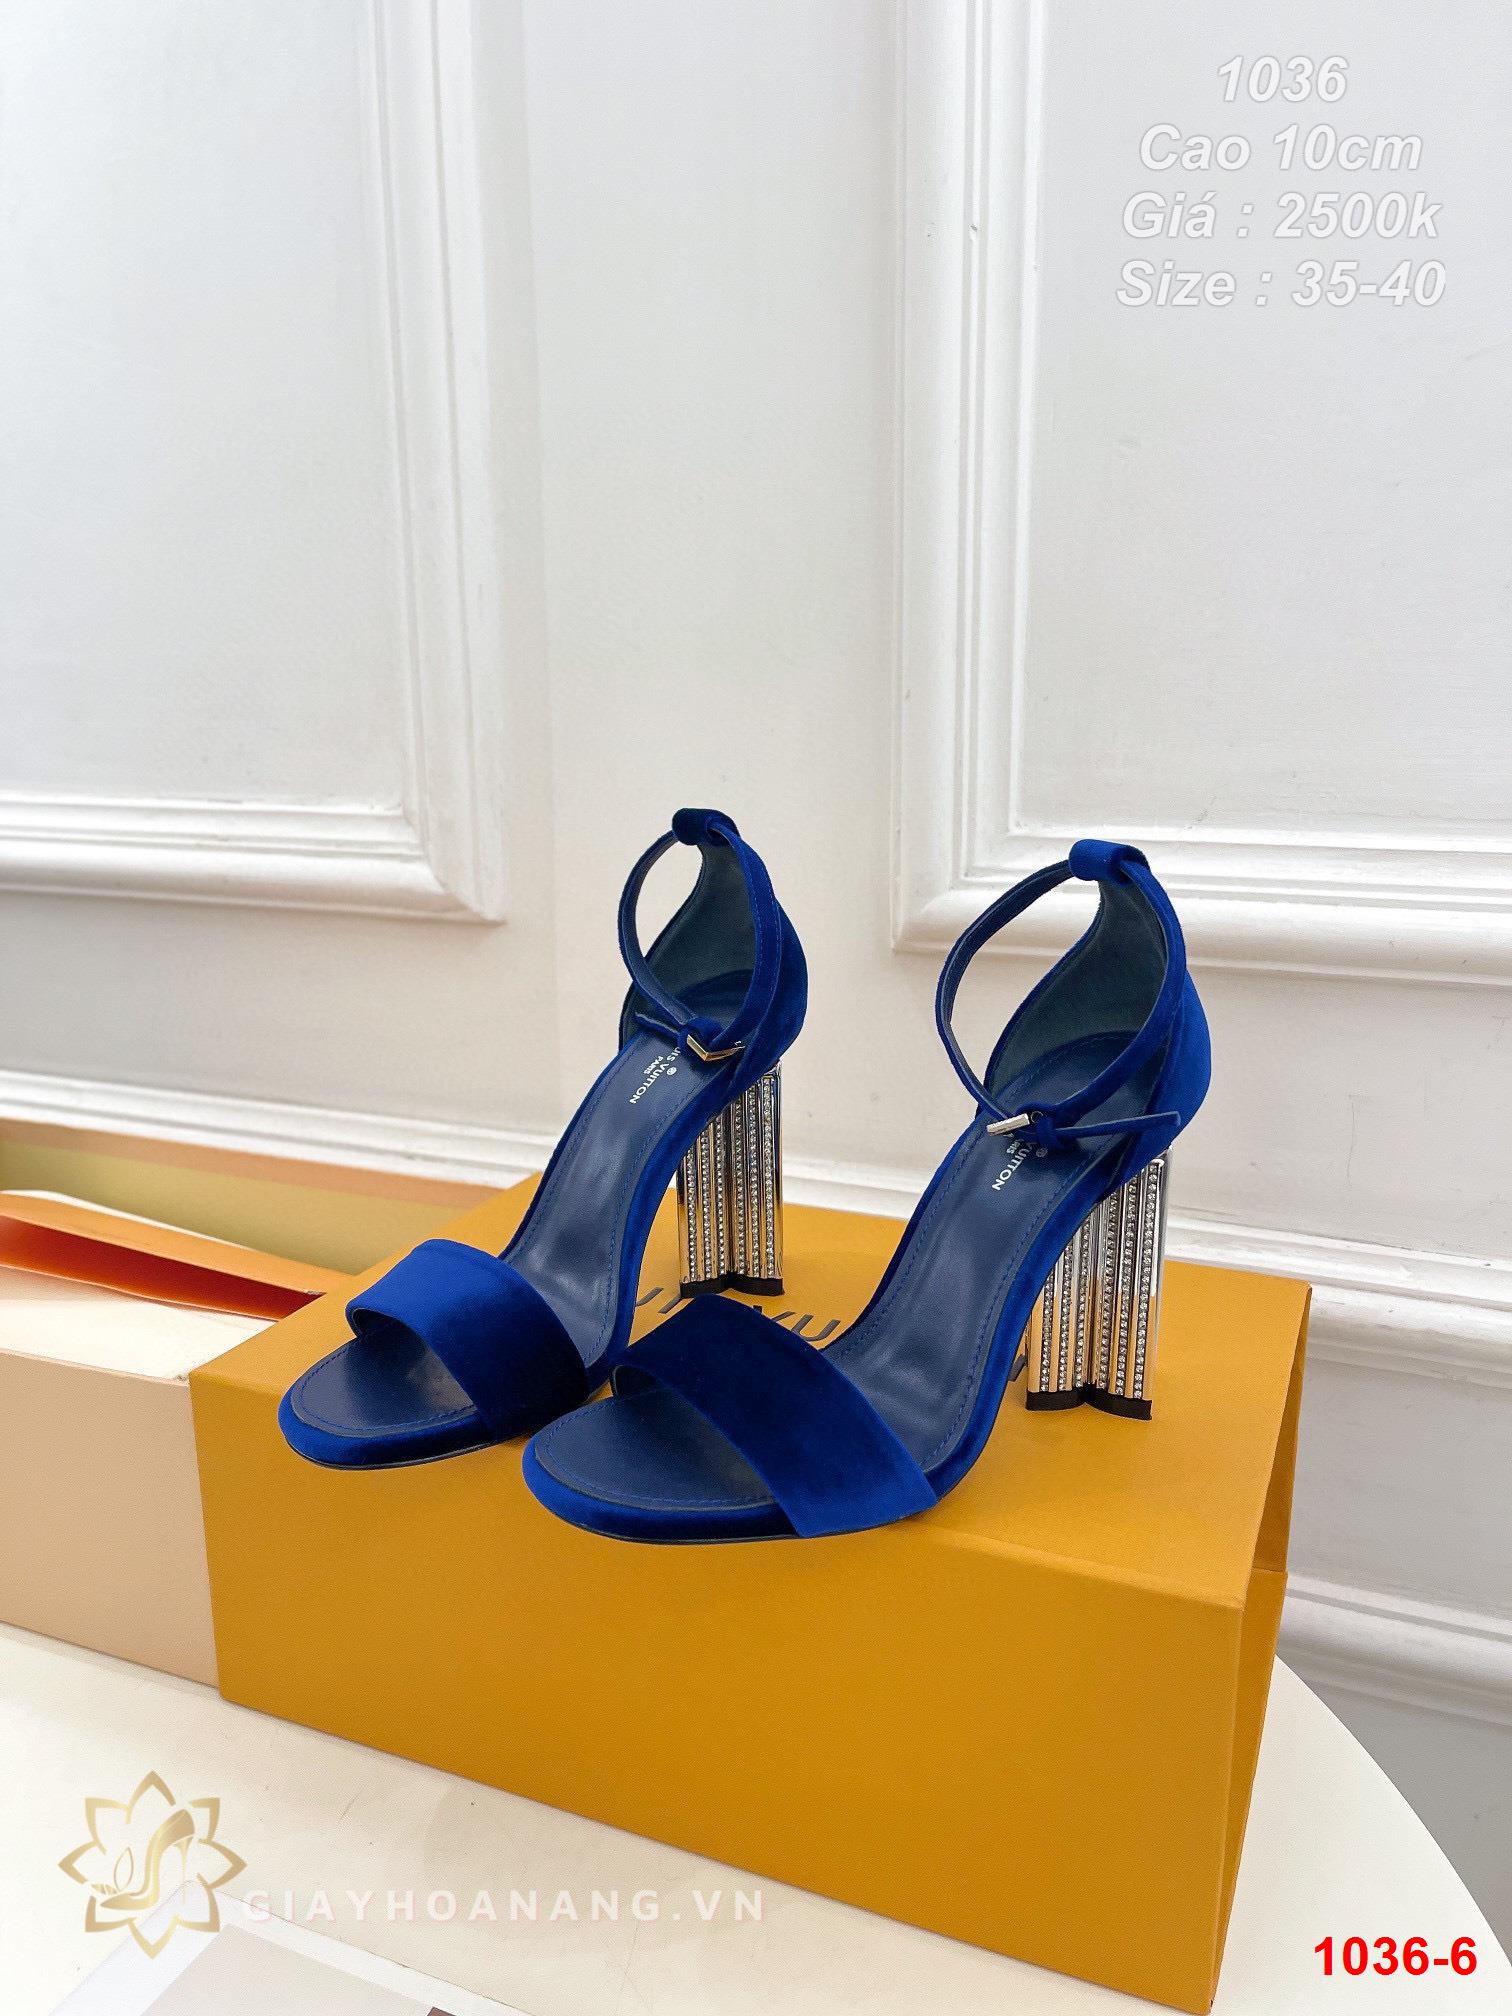 1036-6 Louis Vuitton sandal cao gót 10cm siêu cấp